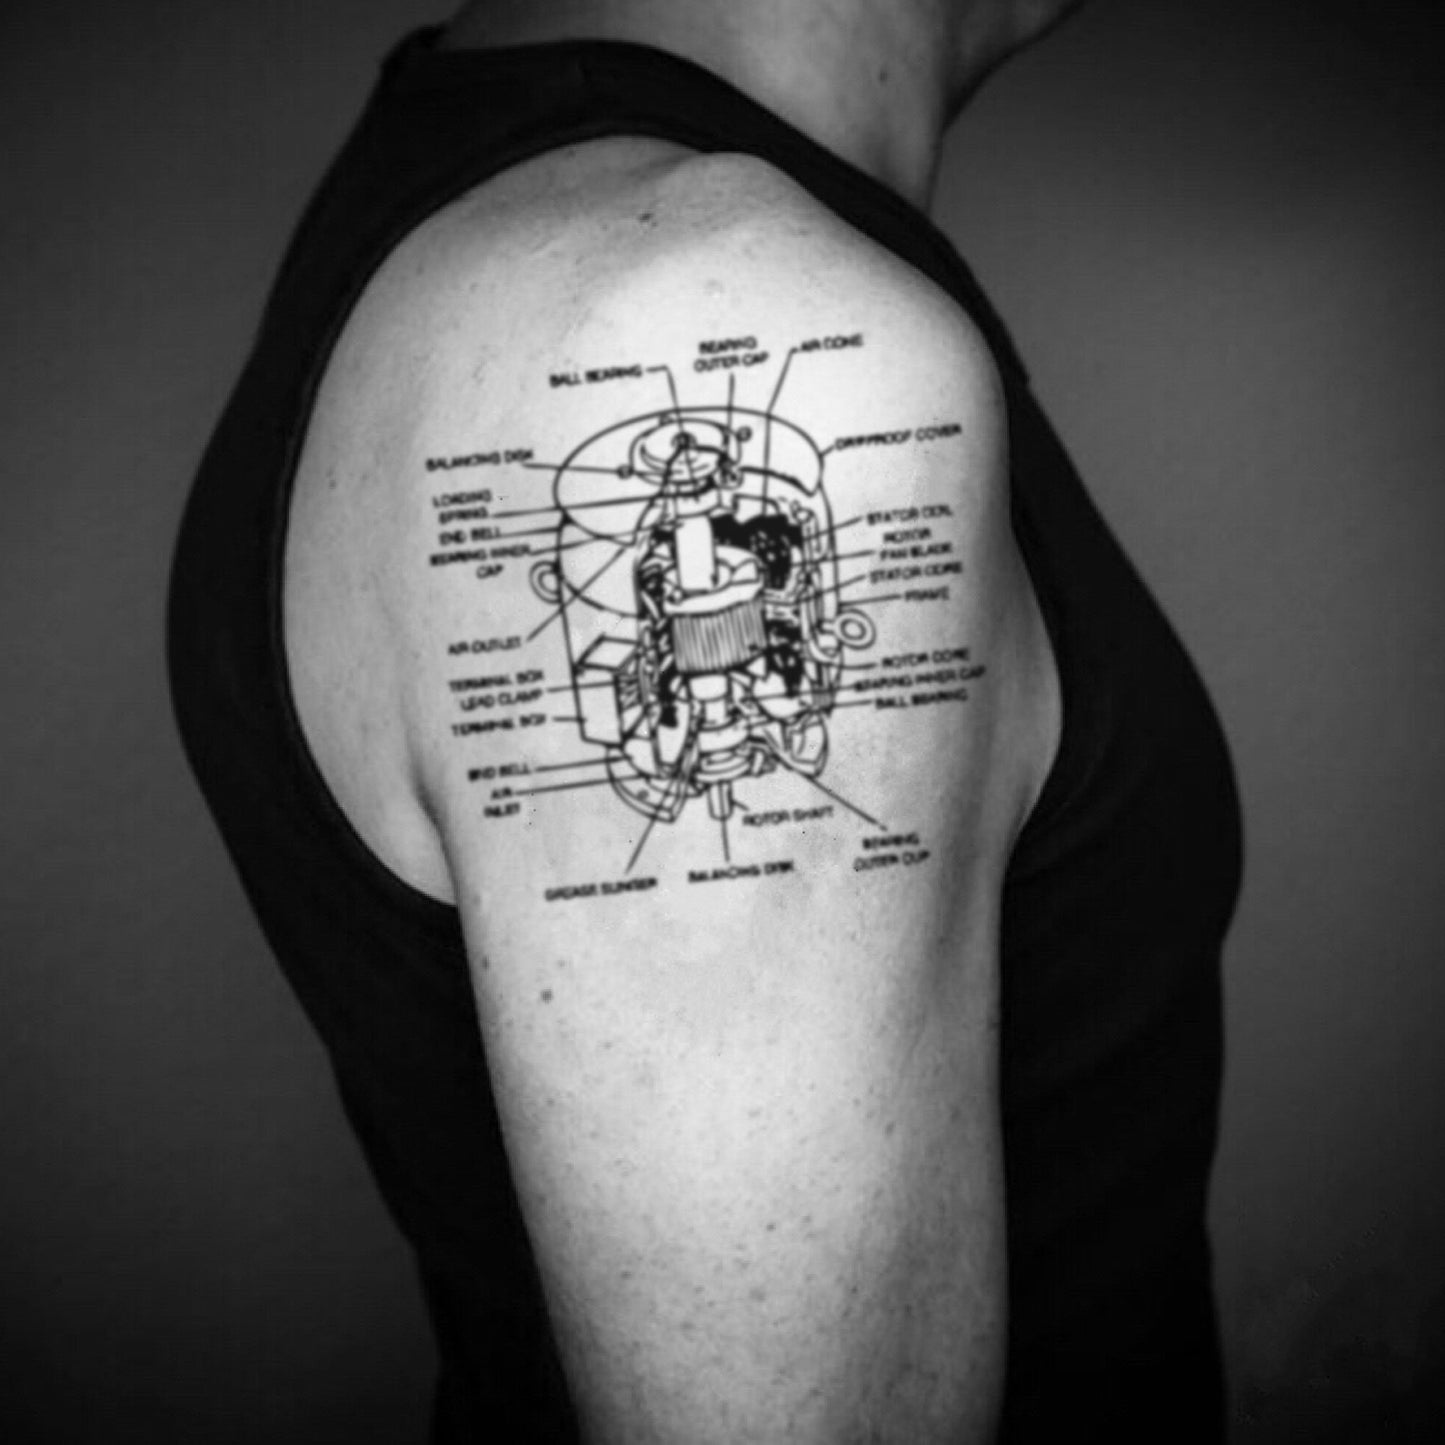 fake big alternator illustrative temporary tattoo sticker design idea on upper arm